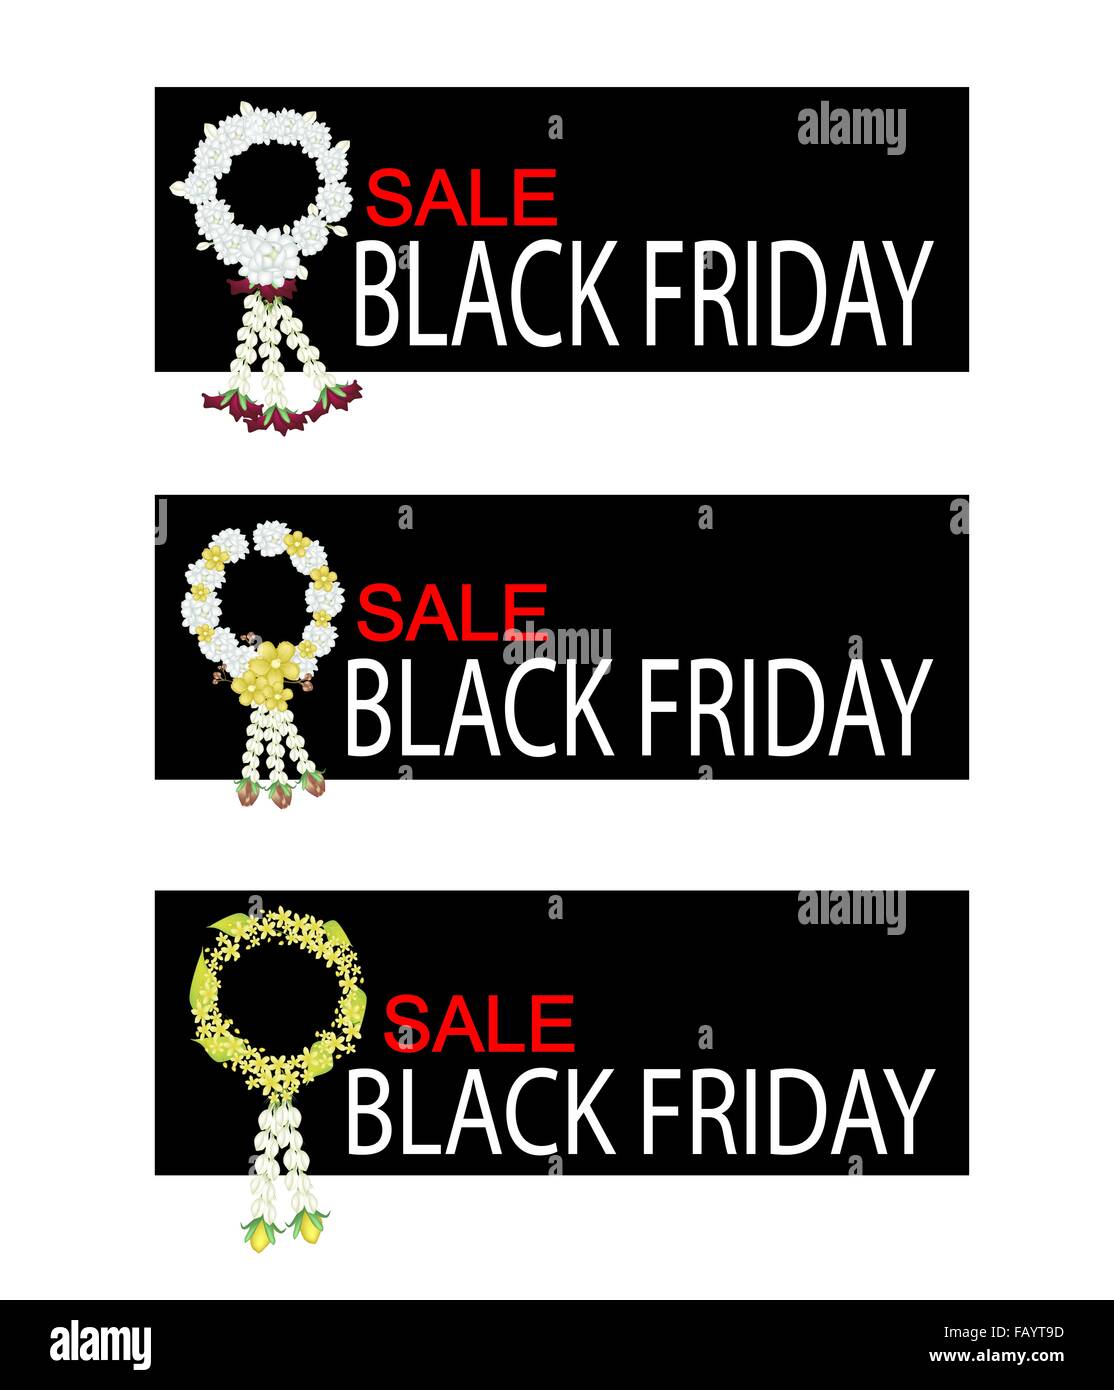 Illustration of Beautiful Flower Judy Garland on Black Friday Shopping Banner for Start Christmas Shopping Season. Stock Photo